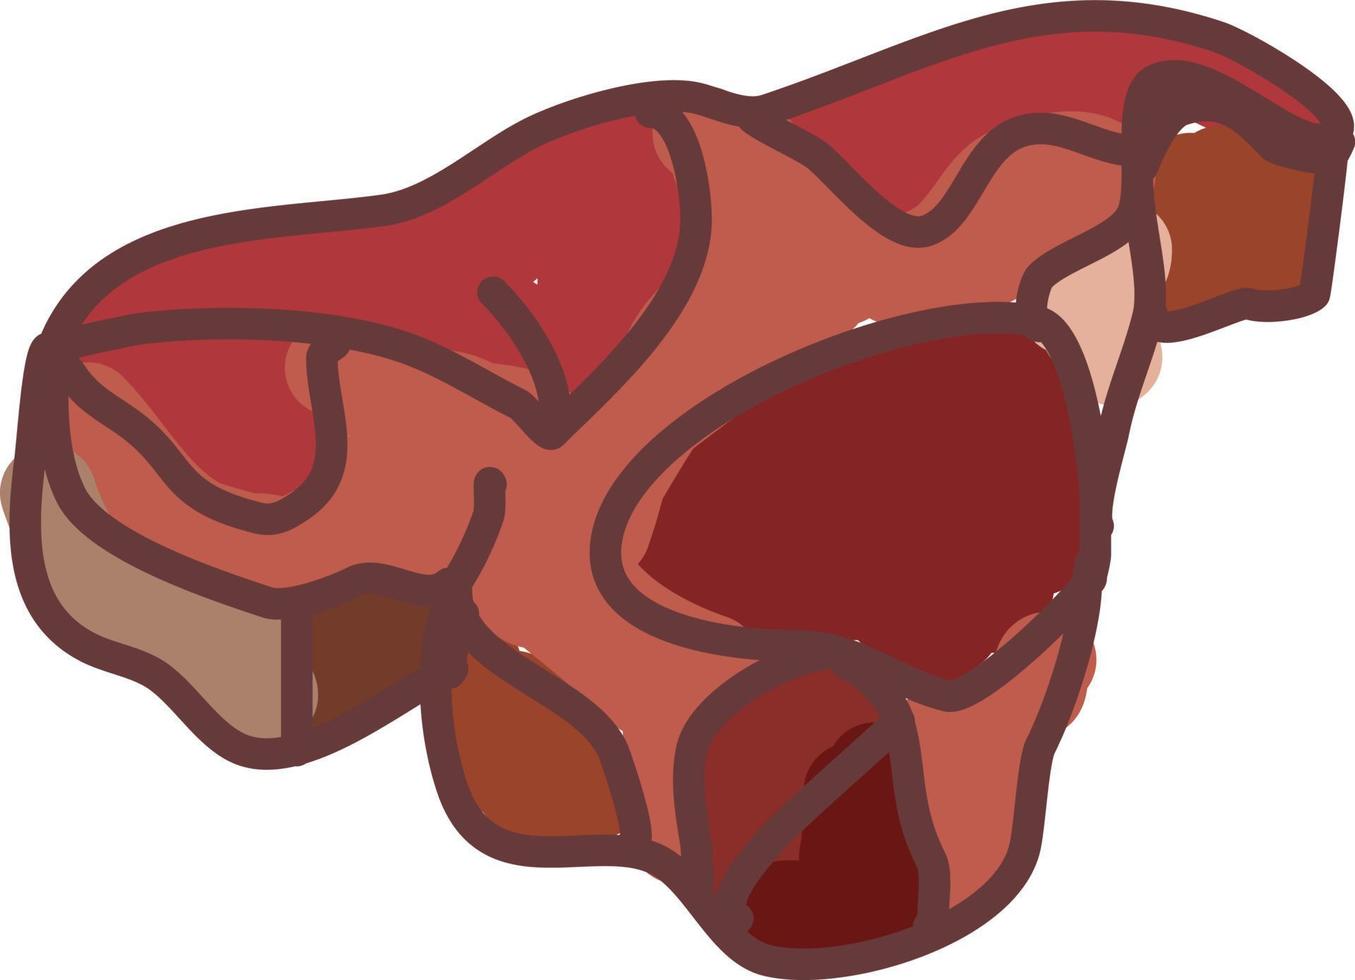 Big steak, illustration, vector on white background.